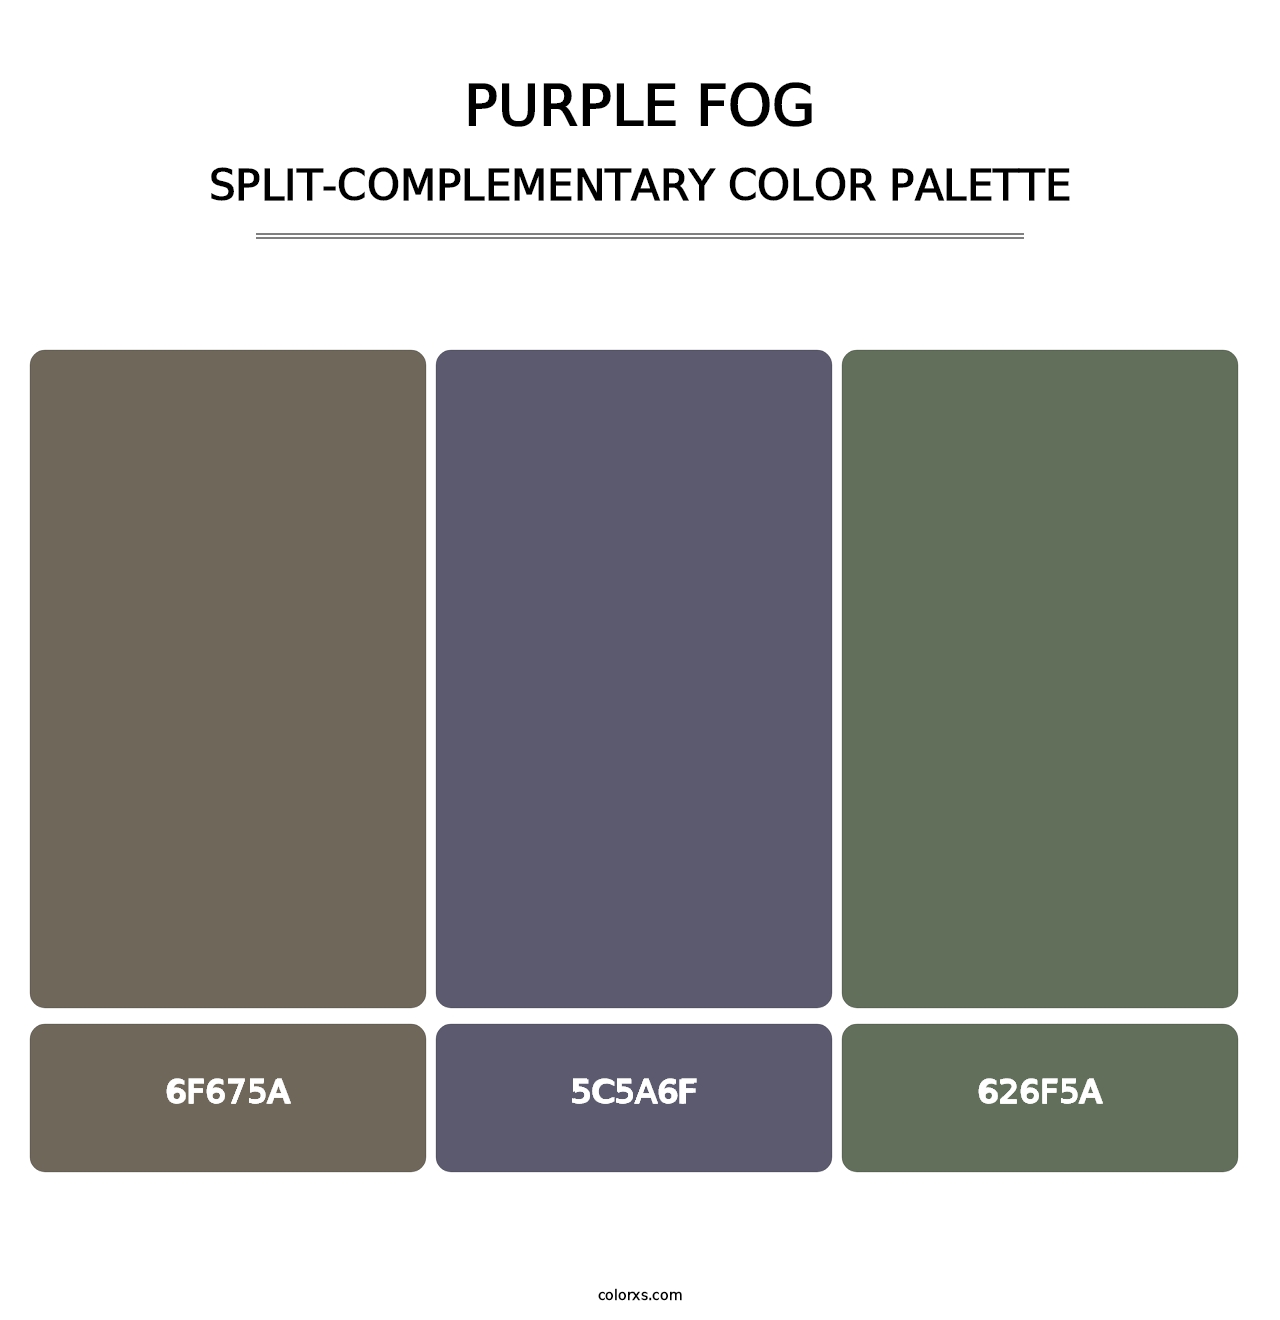 Purple Fog - Split-Complementary Color Palette